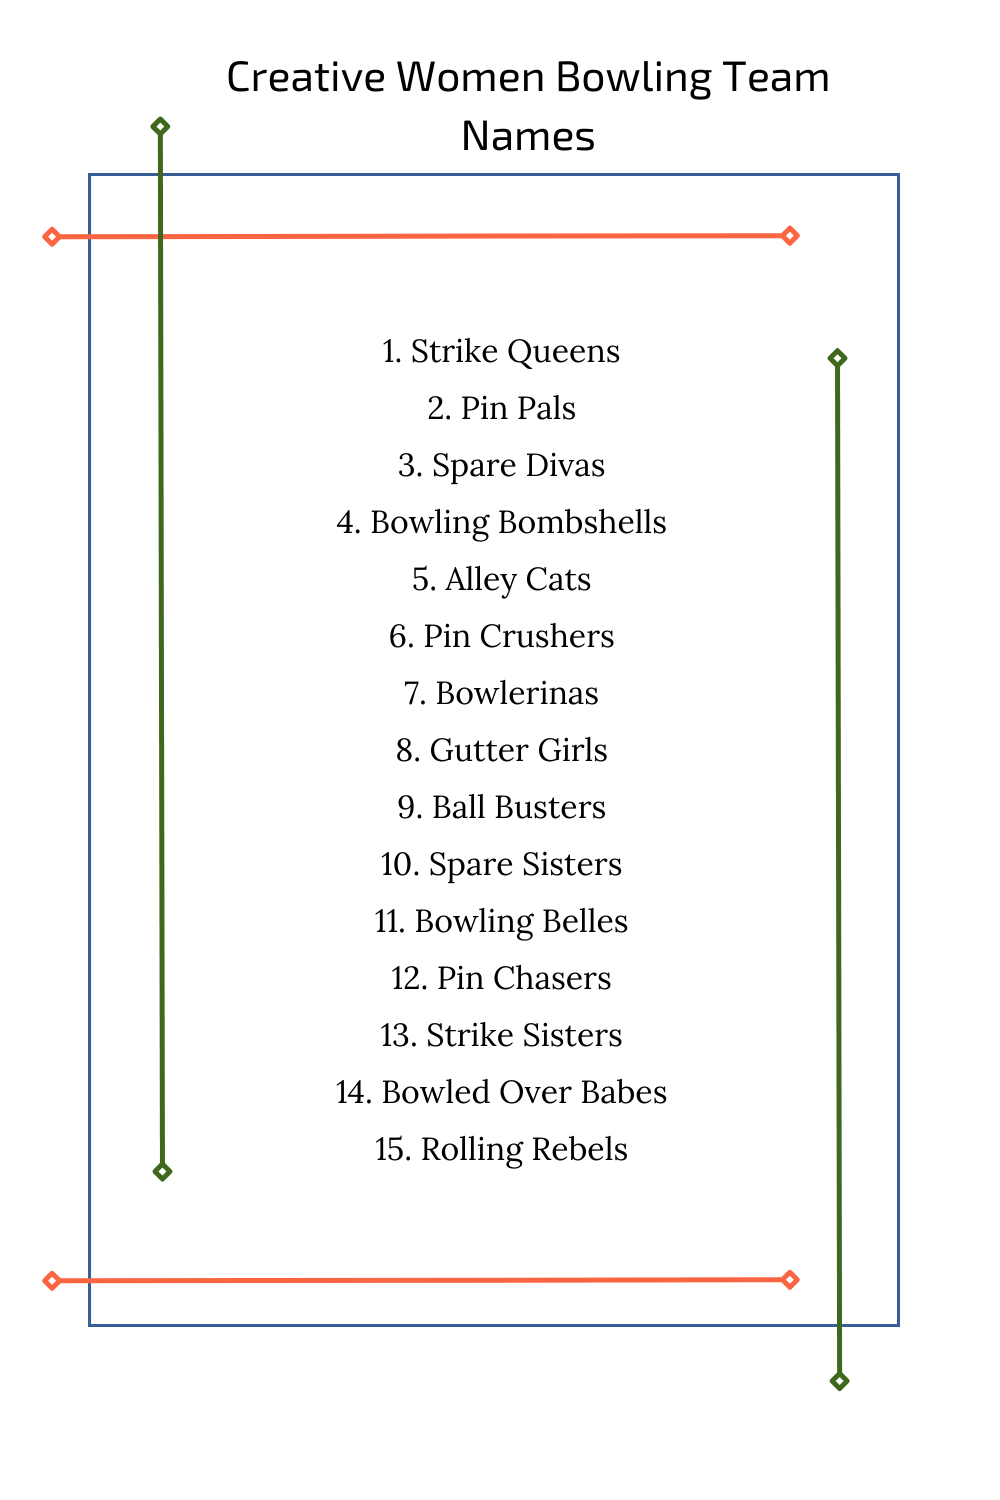 Creative Women Bowling Team Names